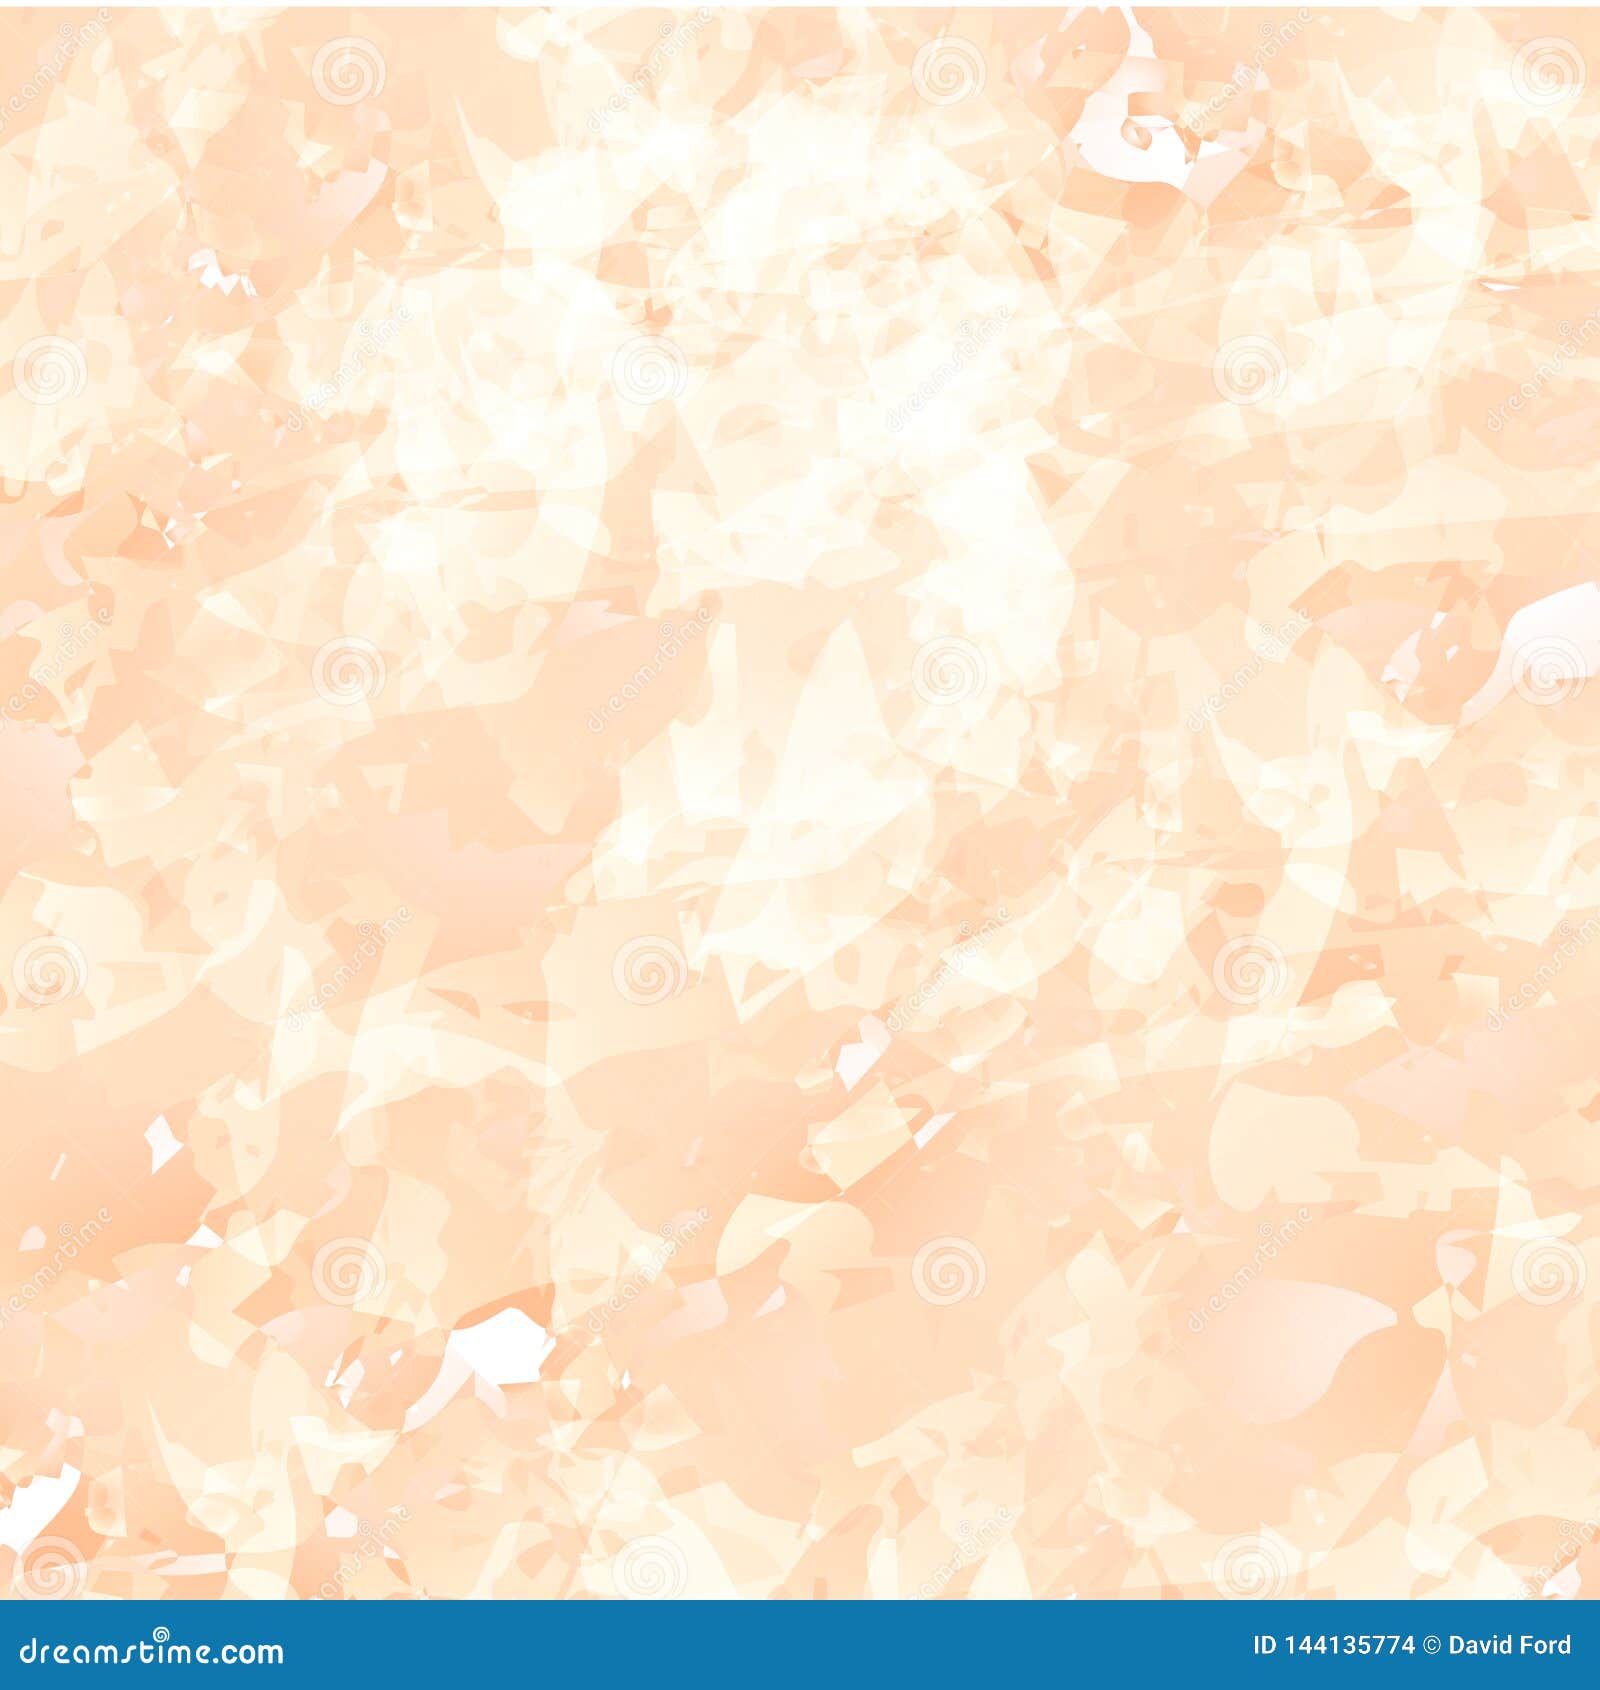 Peach Marble Background stock illustration. Illustration of texture 144135774